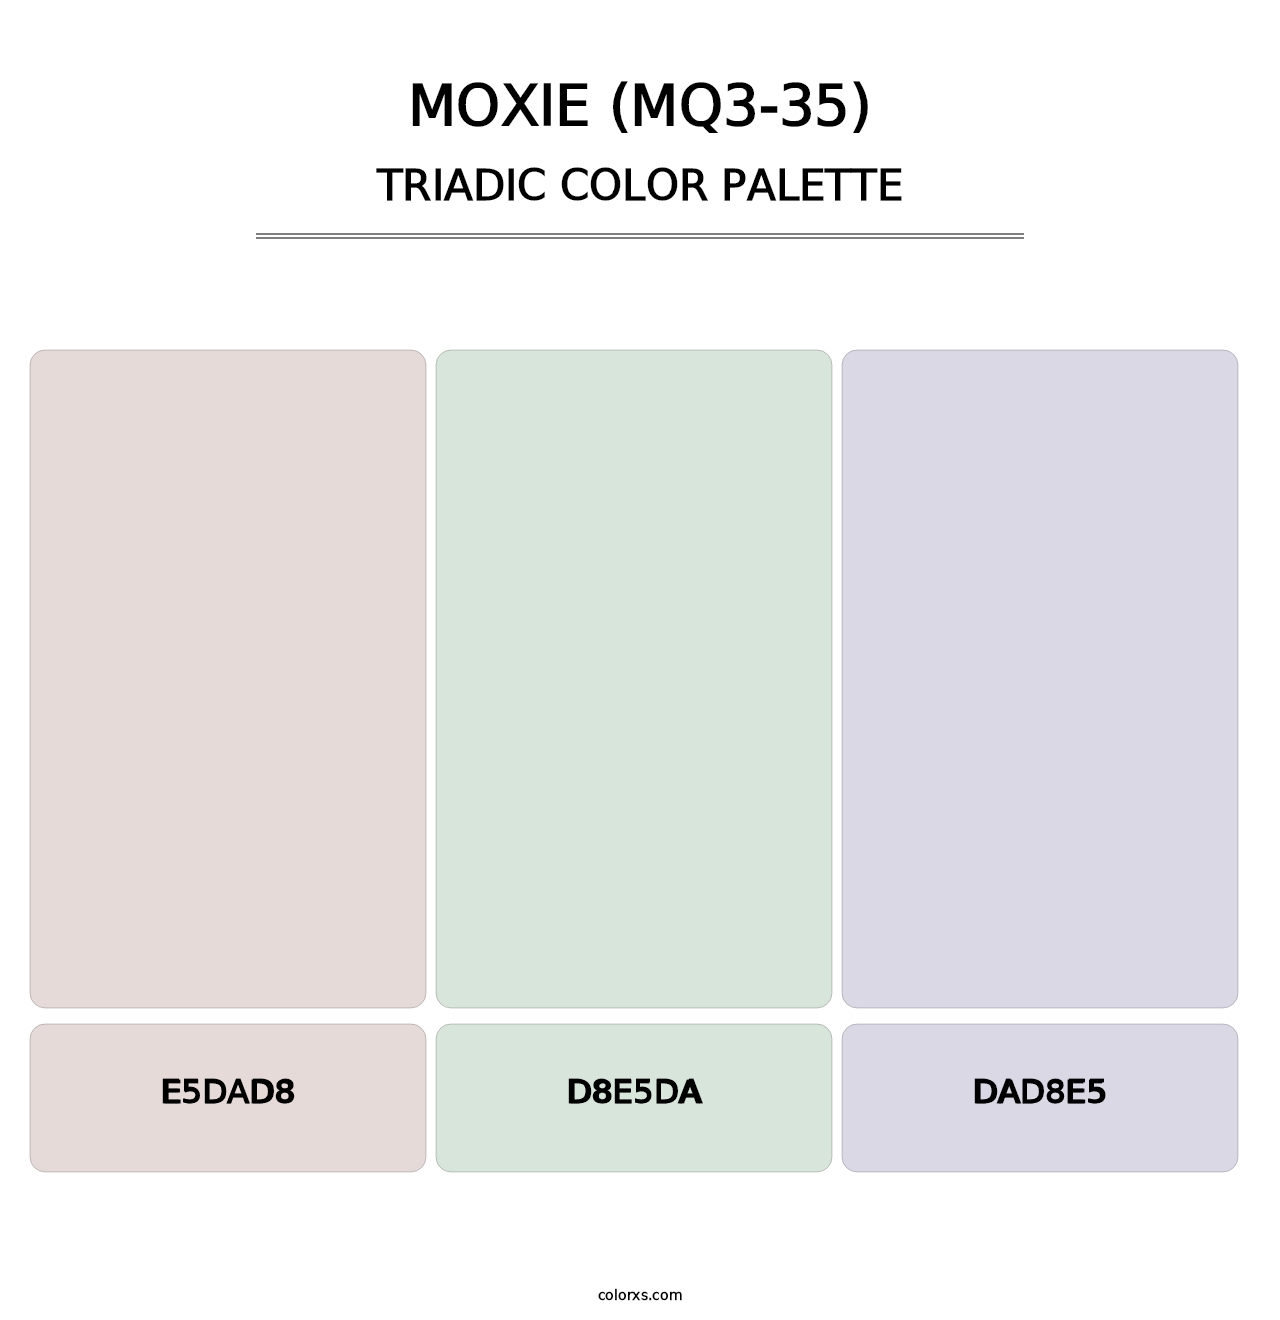 Moxie (MQ3-35) - Triadic Color Palette